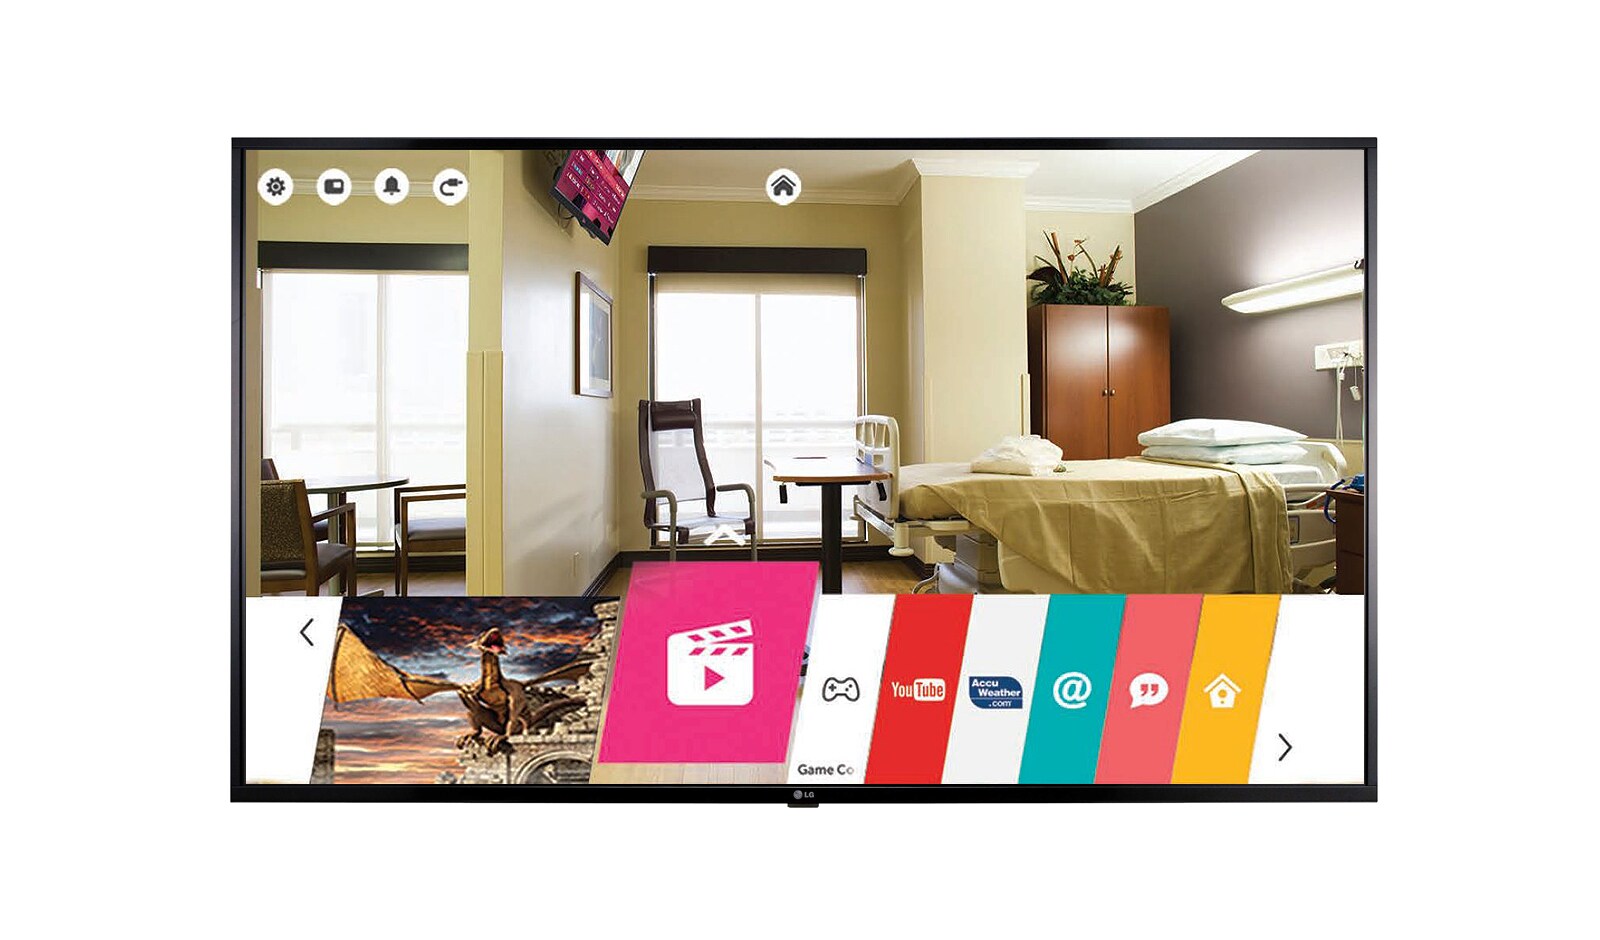 LG - 32 -Inch Class LED HD Smart webOS TV